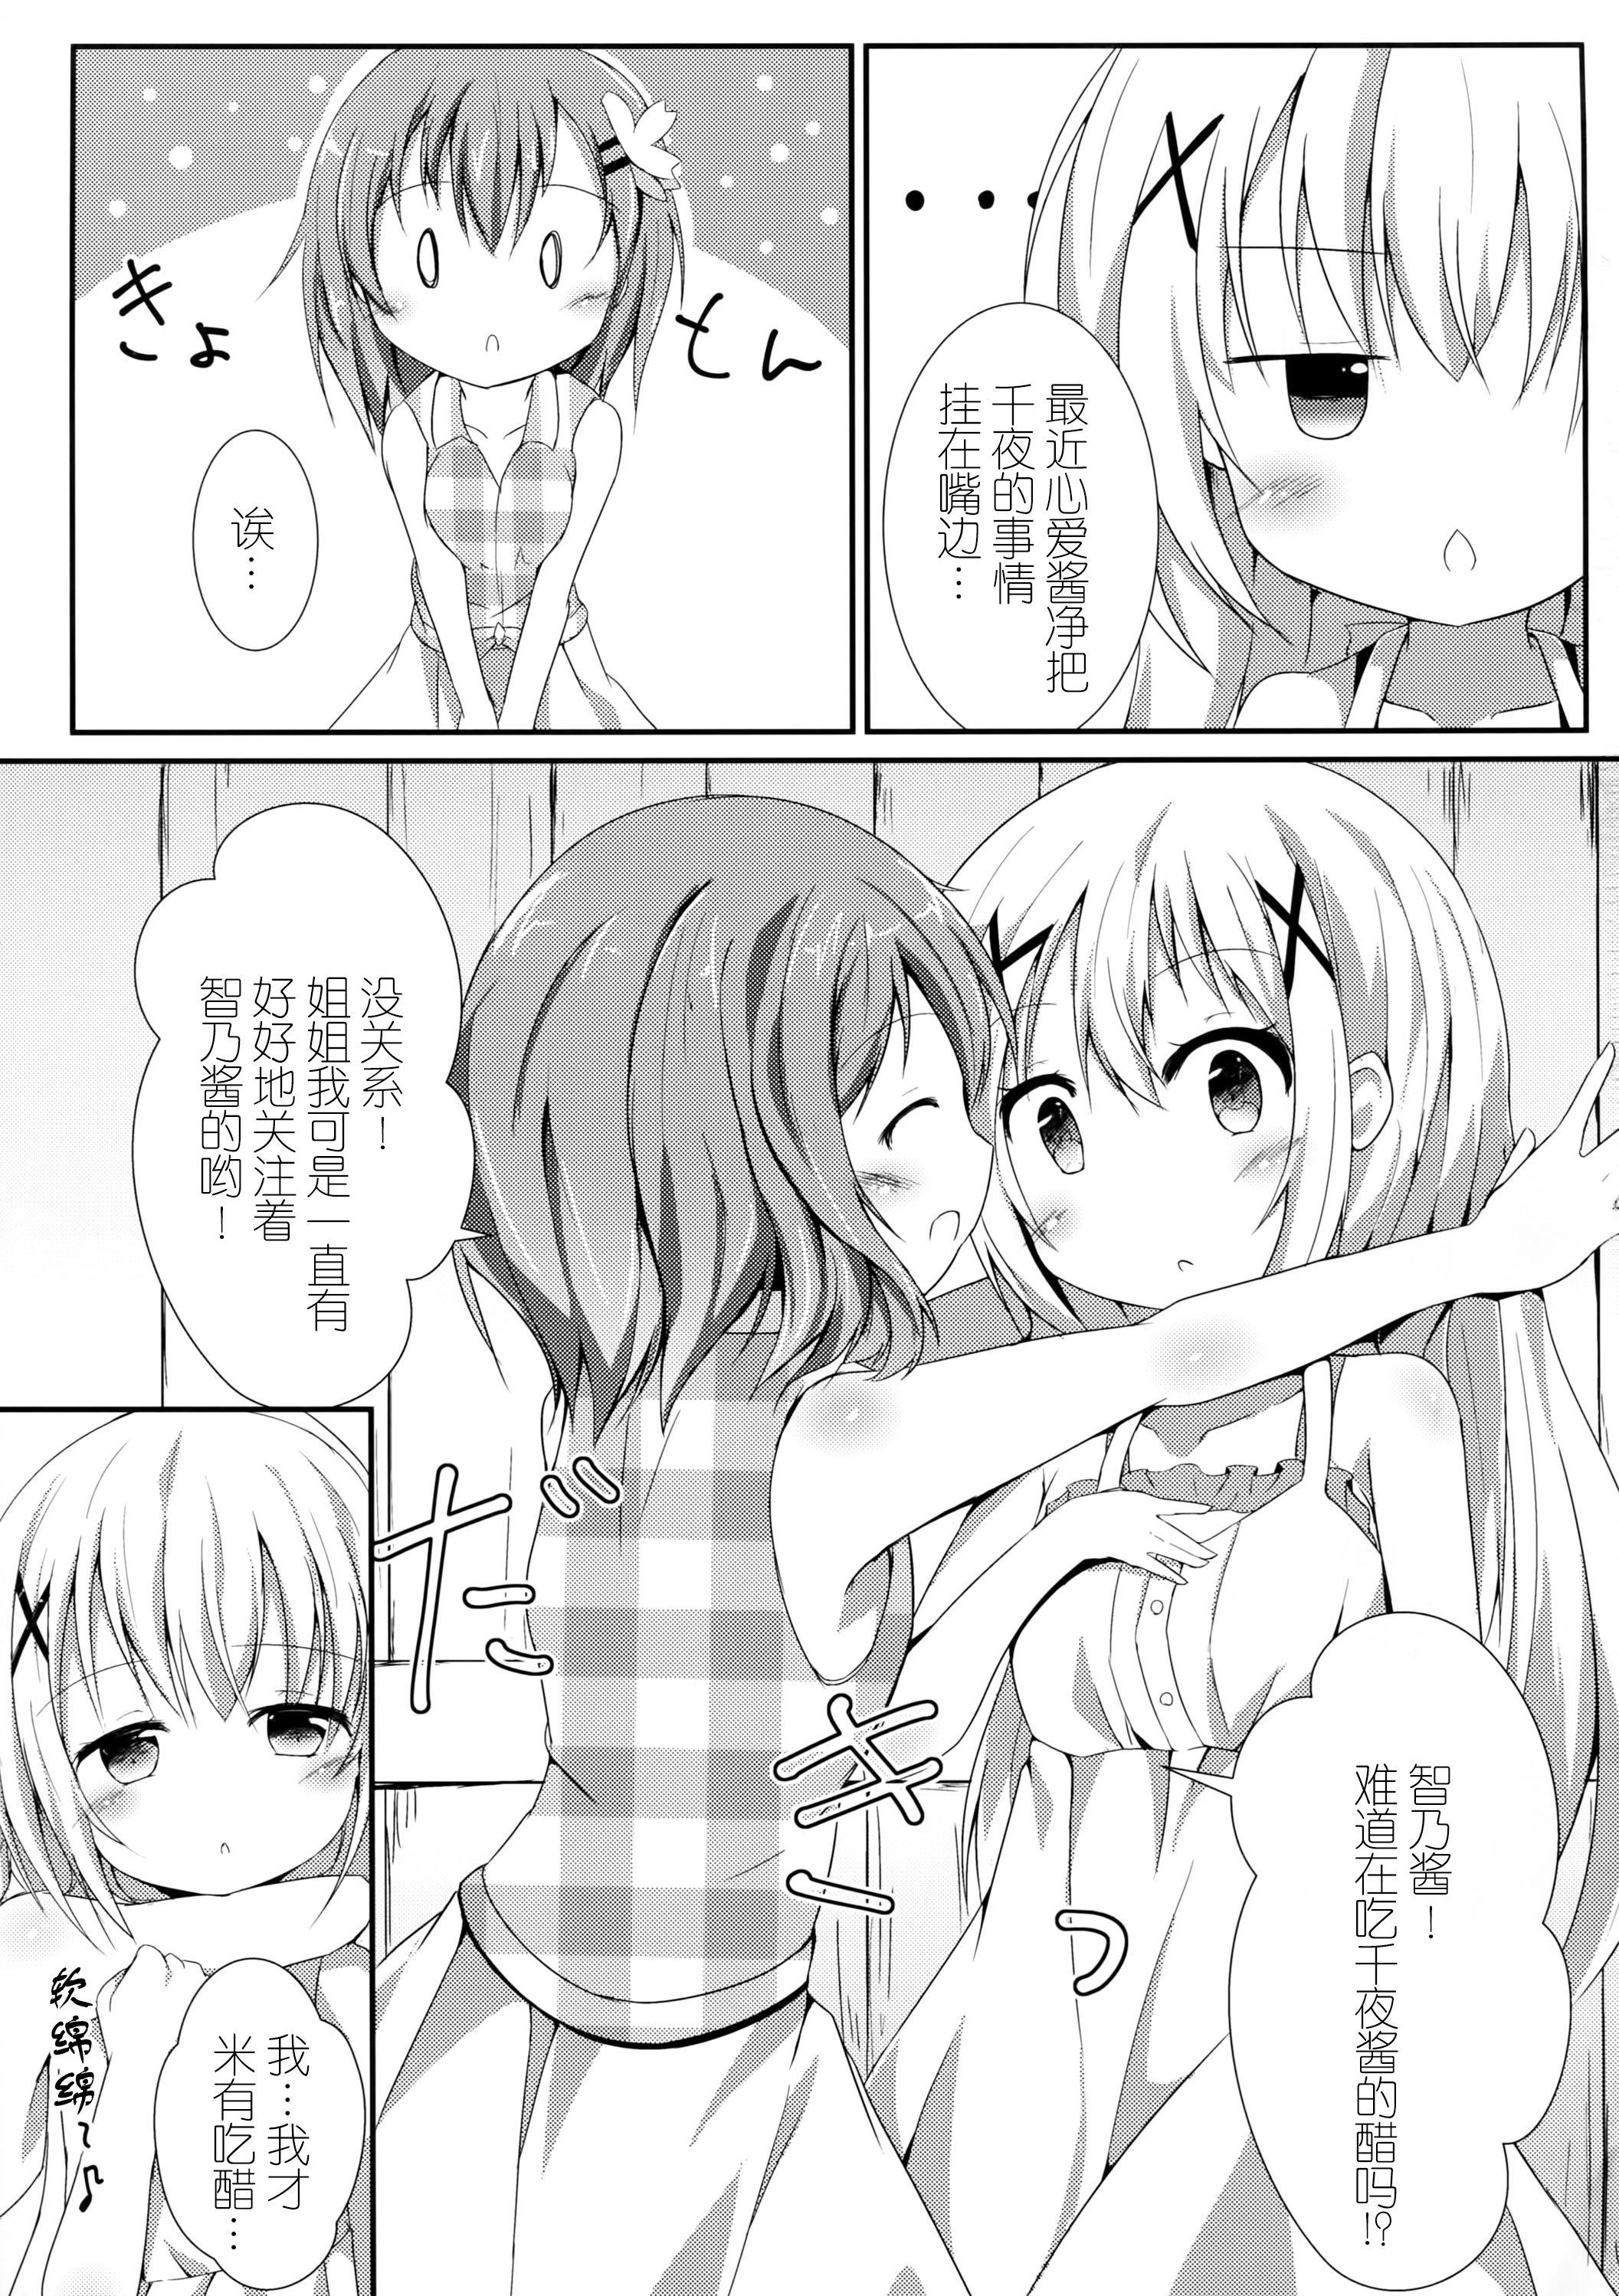 Spread Sister or Not Sister?? - Gochuumon wa usagi desu ka Chick - Page 5